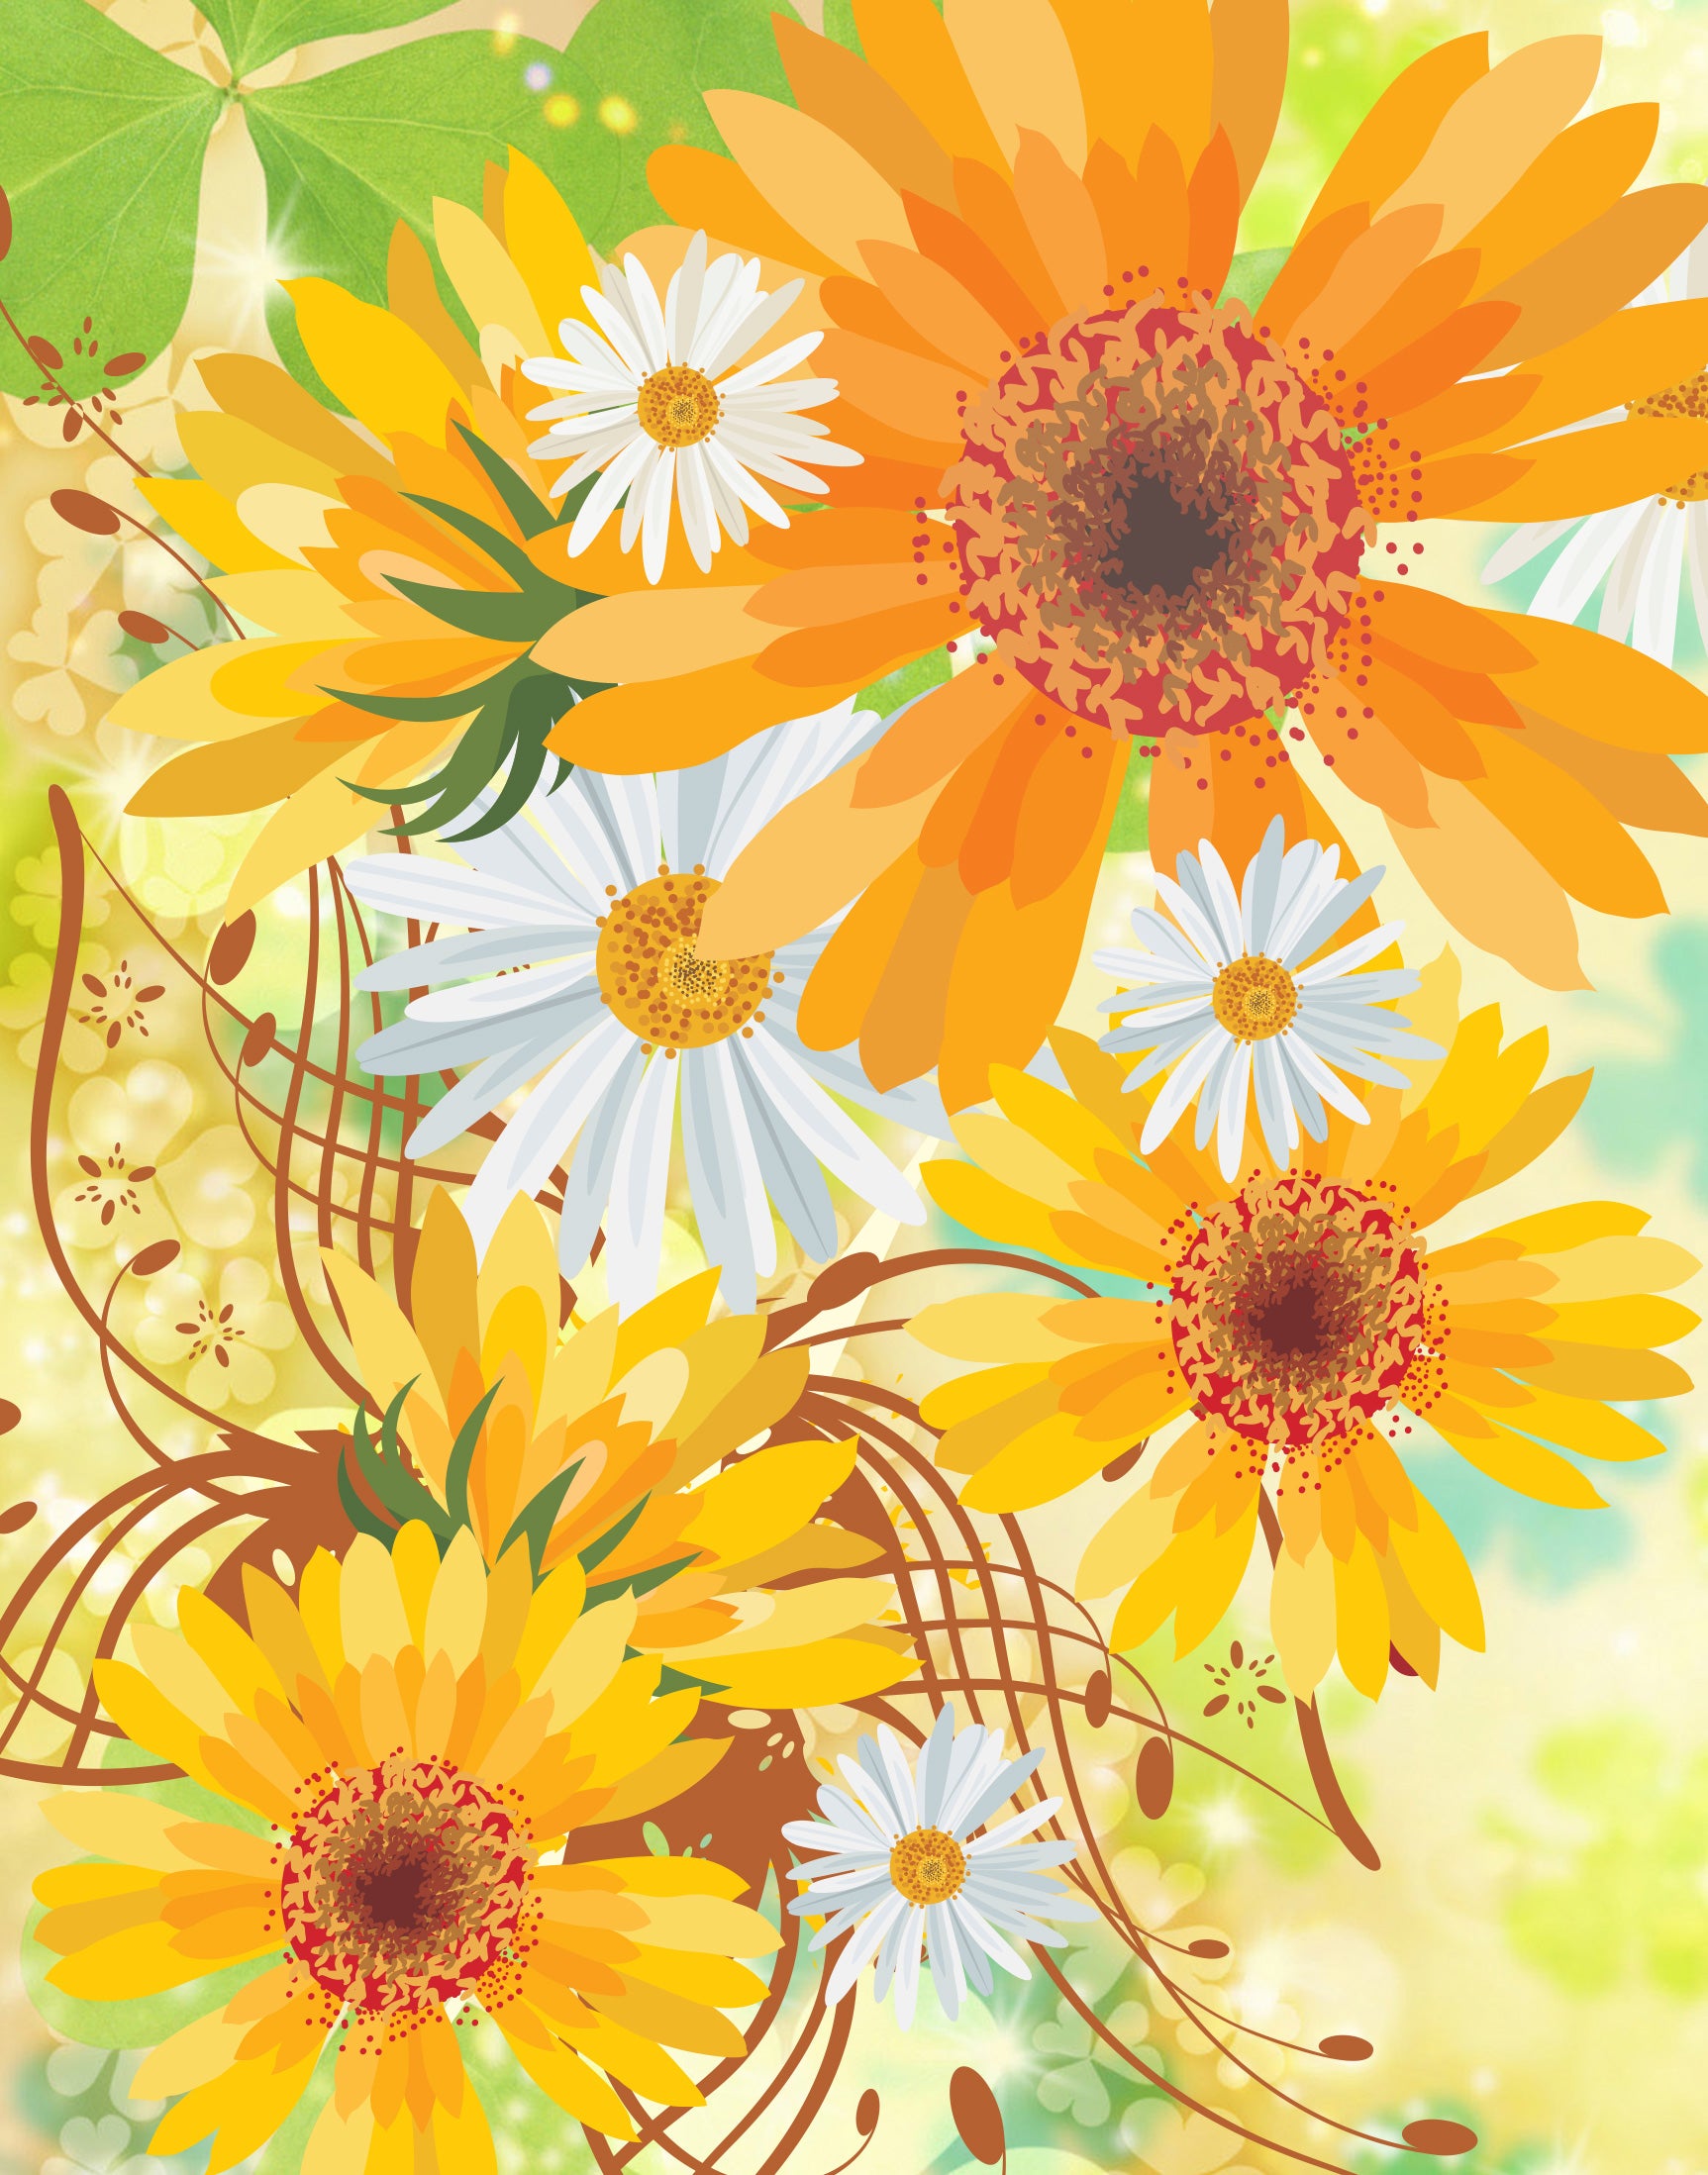 Sunflowers - Puzzleyourpet